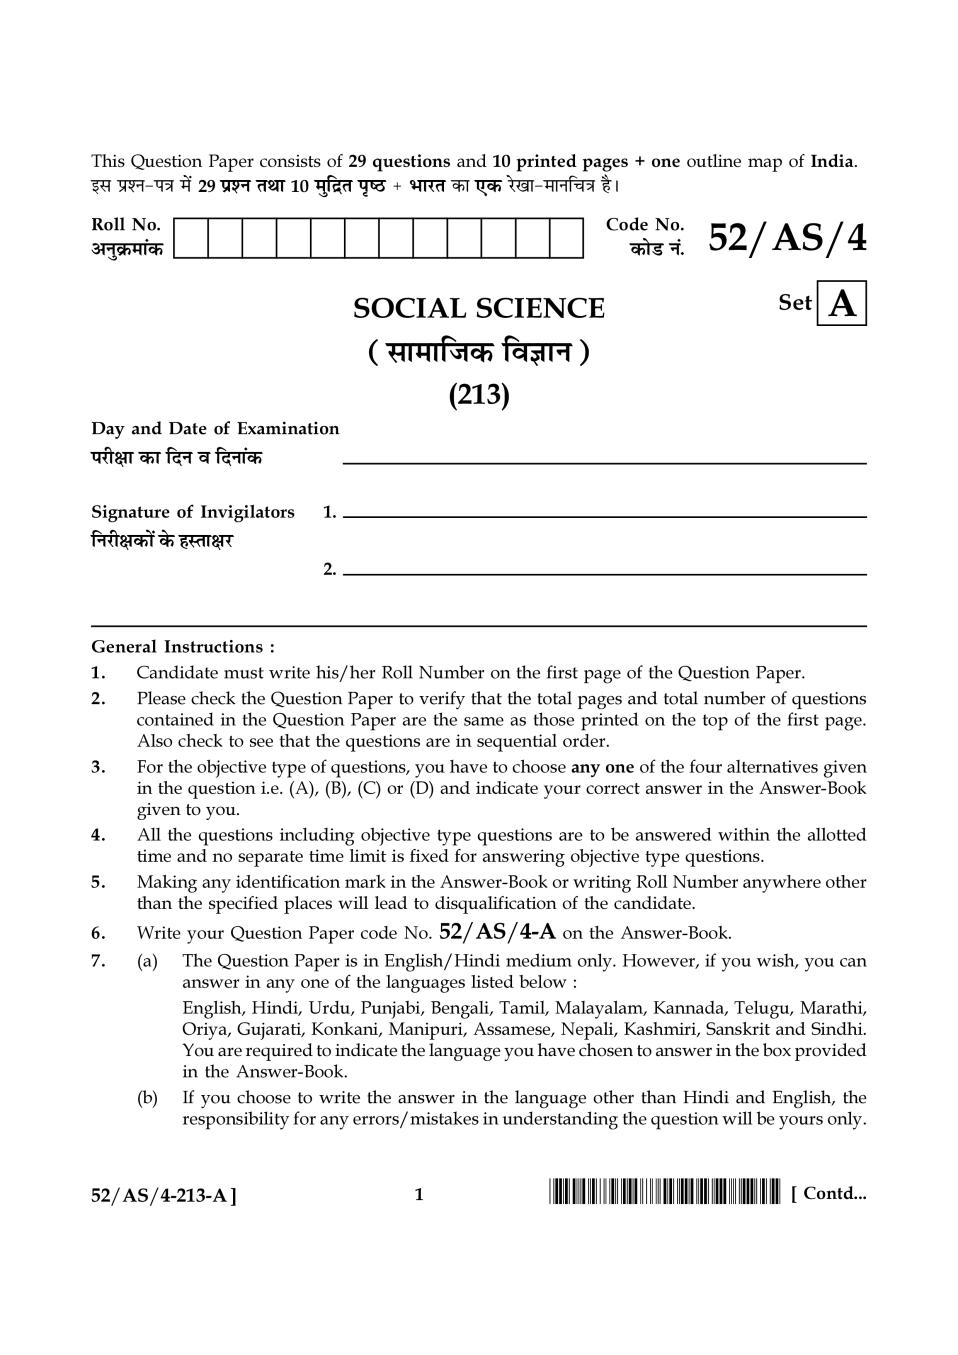 NIOS Class 10 Question Paper Apr 2016 - Social Science - Page 1